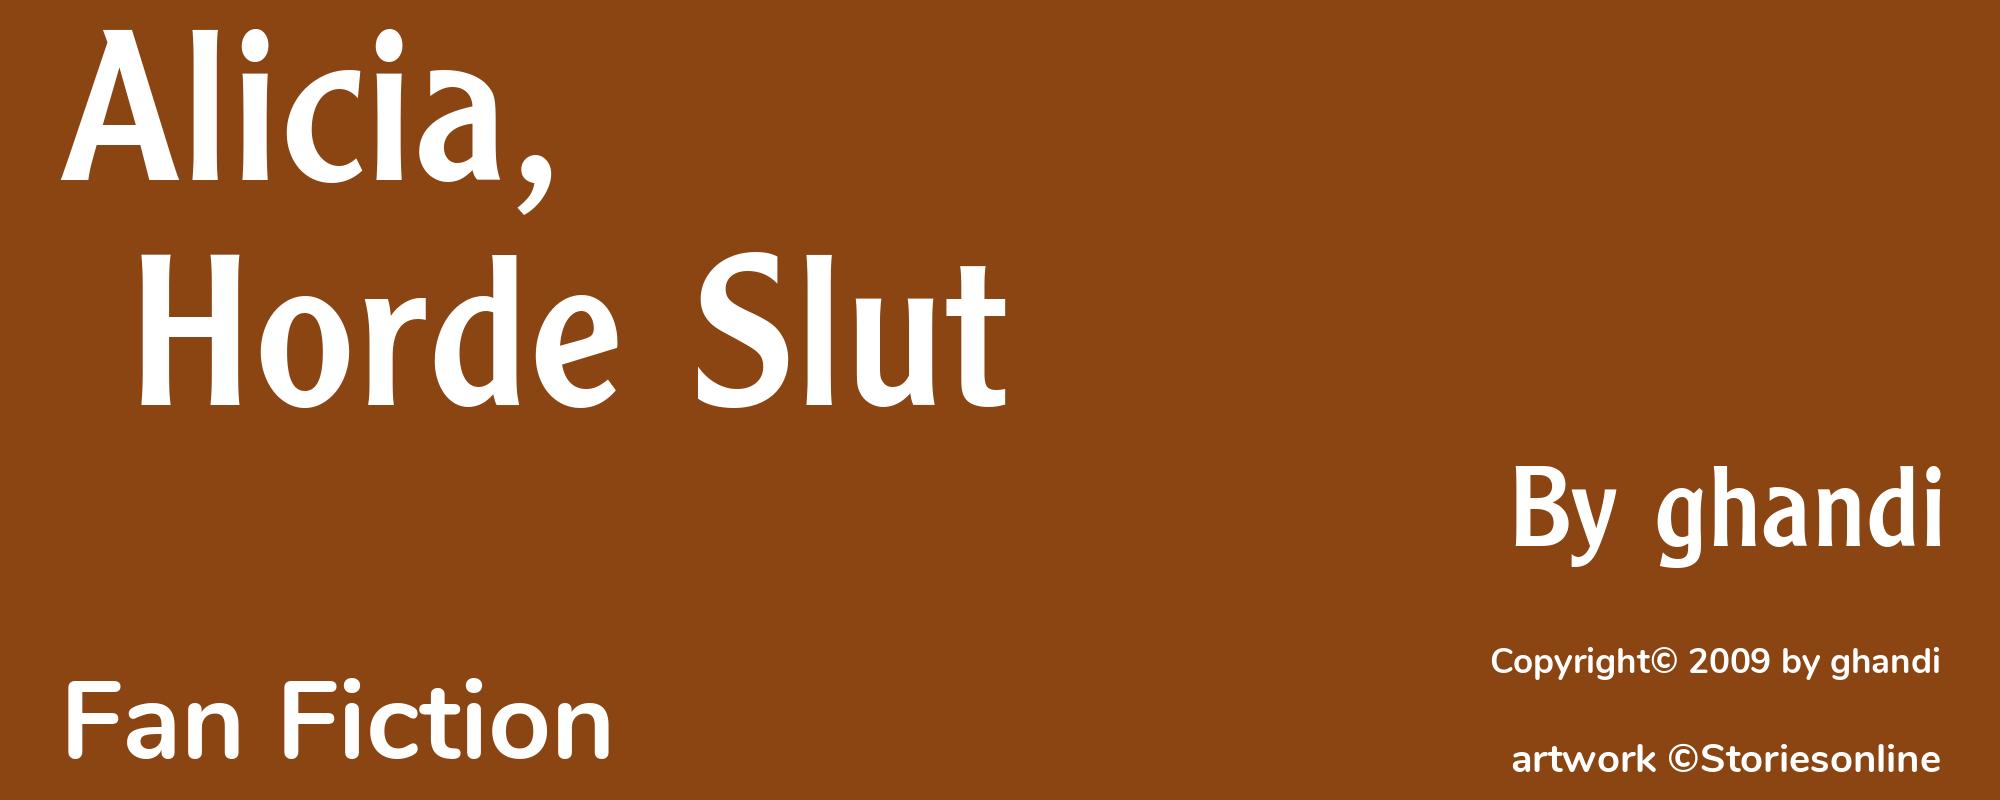 Alicia, Horde Slut - Cover